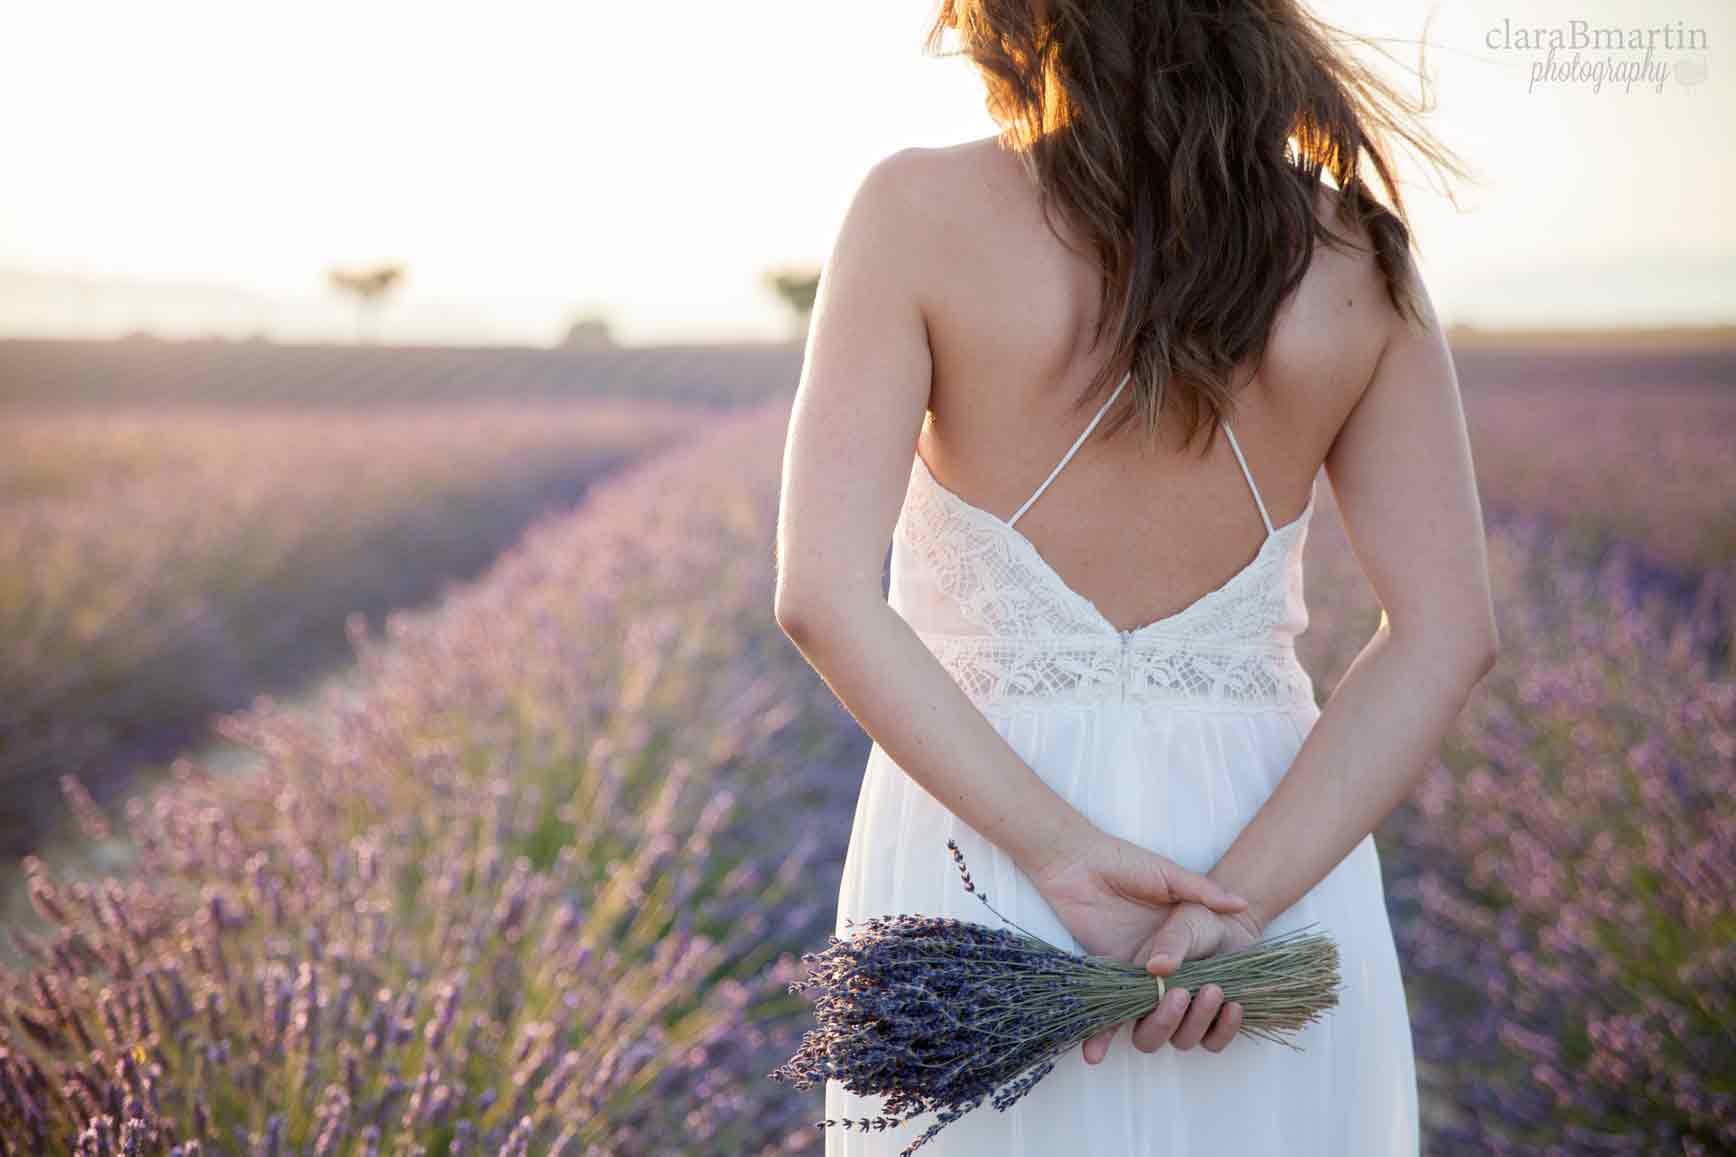 Lavender-fields-Provence-claraBmartin09